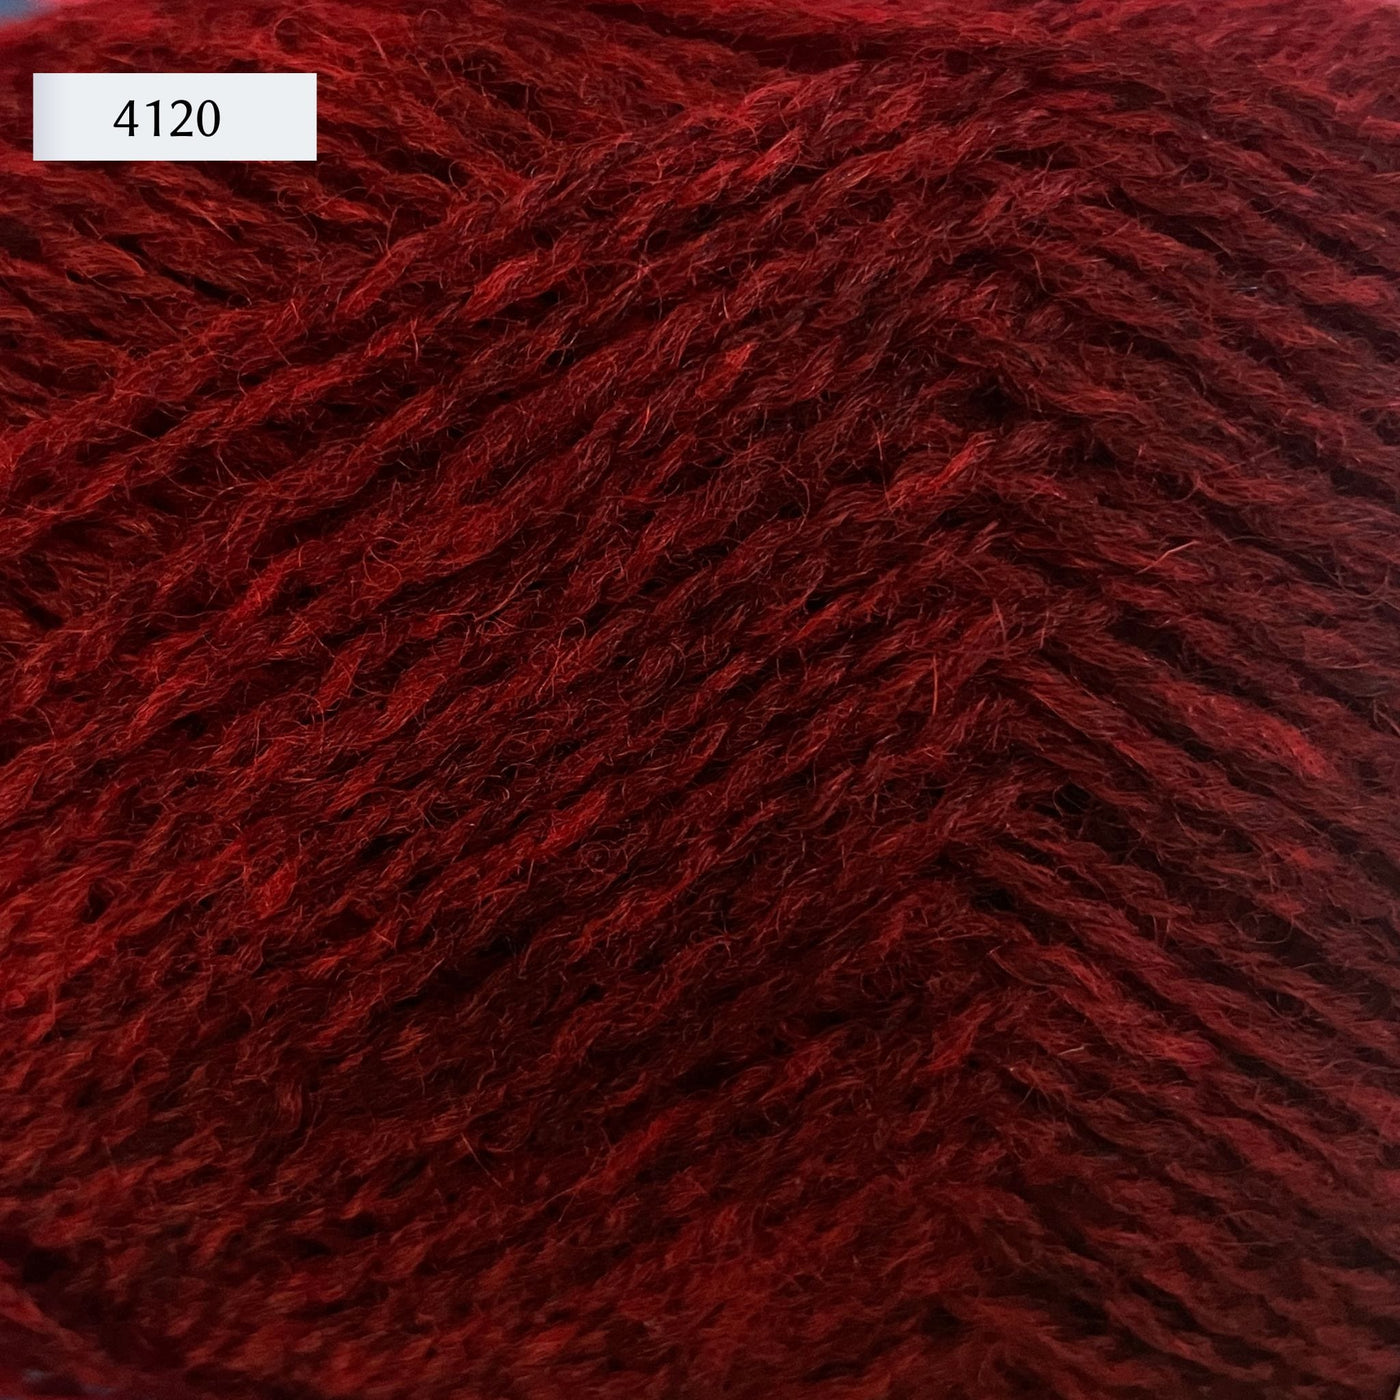 Rauma Finullgarn, a fingering/sport weight yarn, in color 4120, a heathered rich red